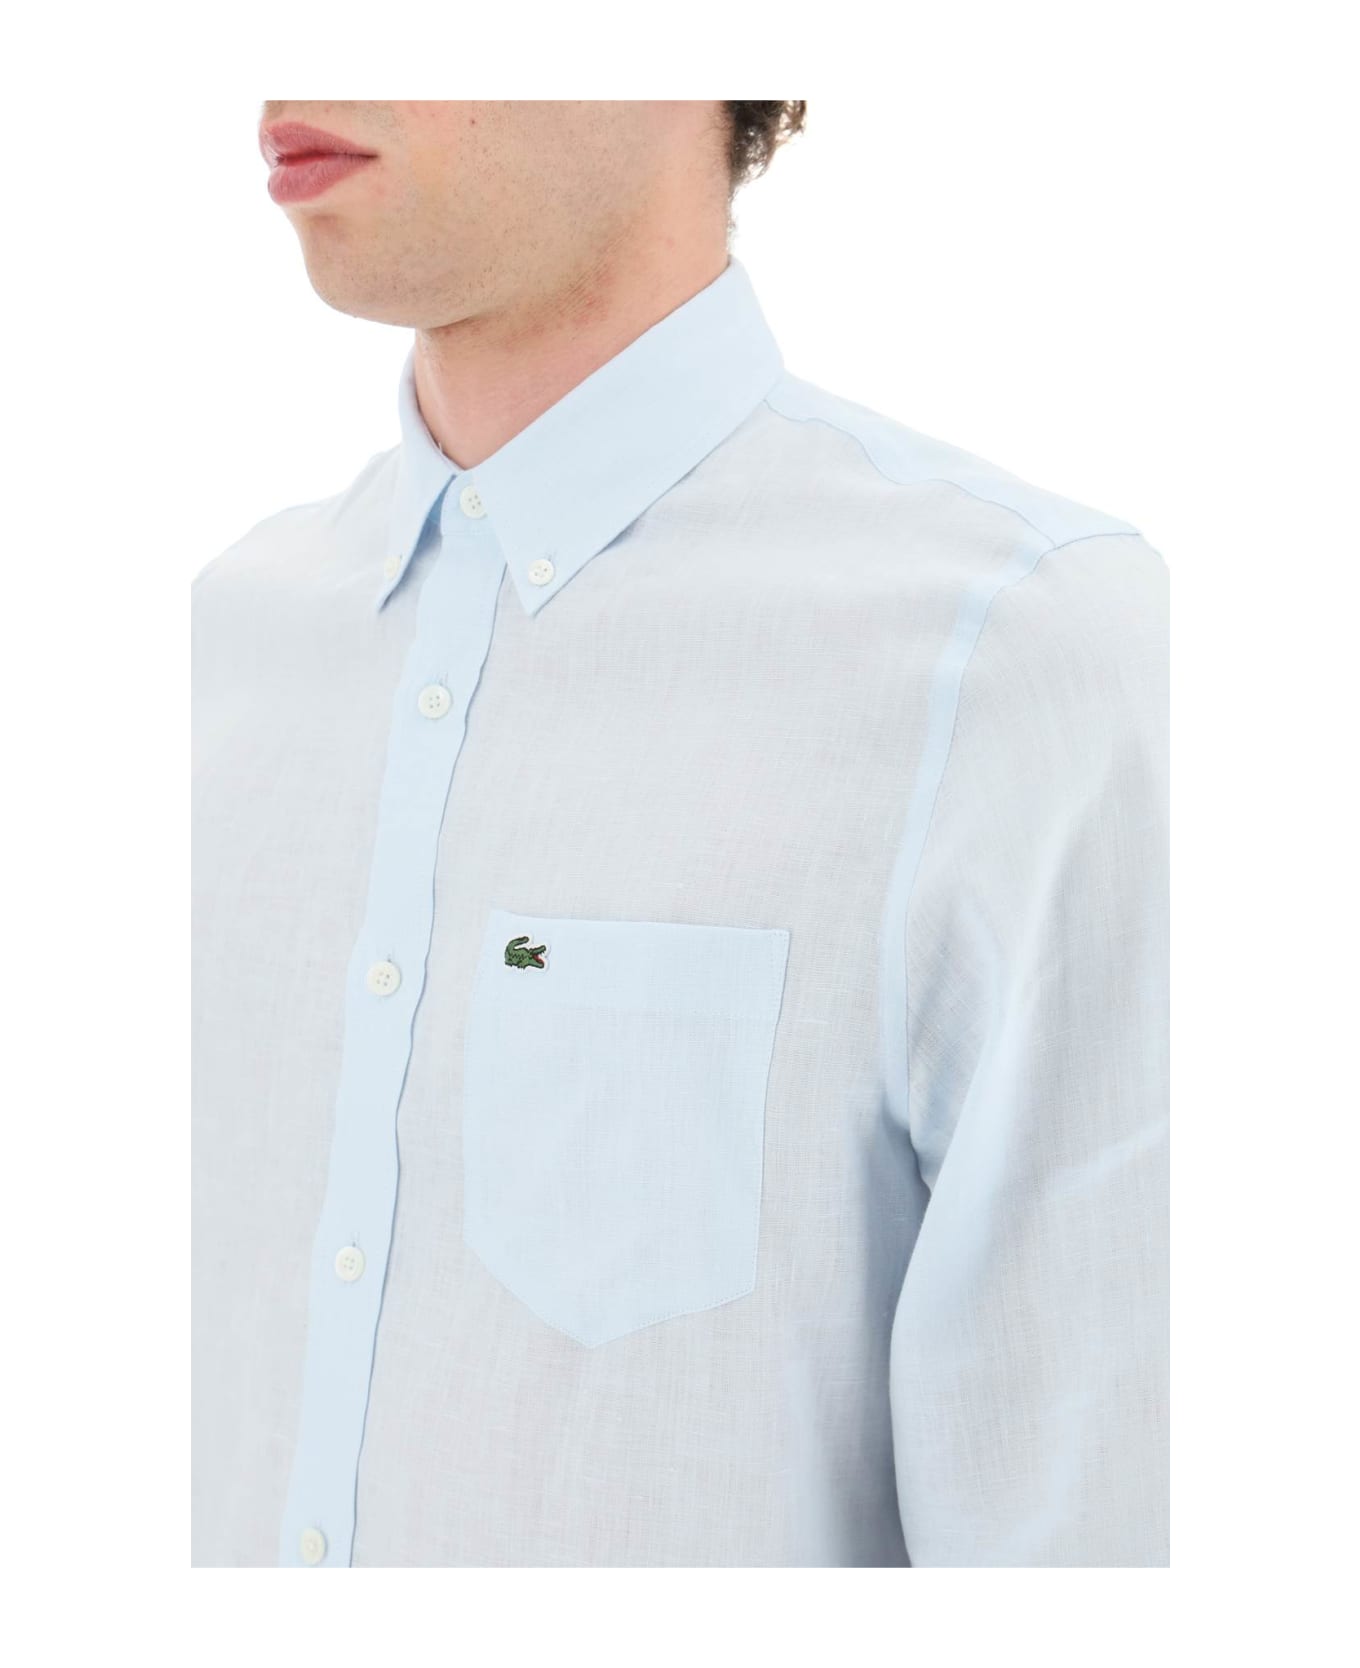 Lacoste Light Linen Shirt - AZZURRO CHIARO (Light blue)